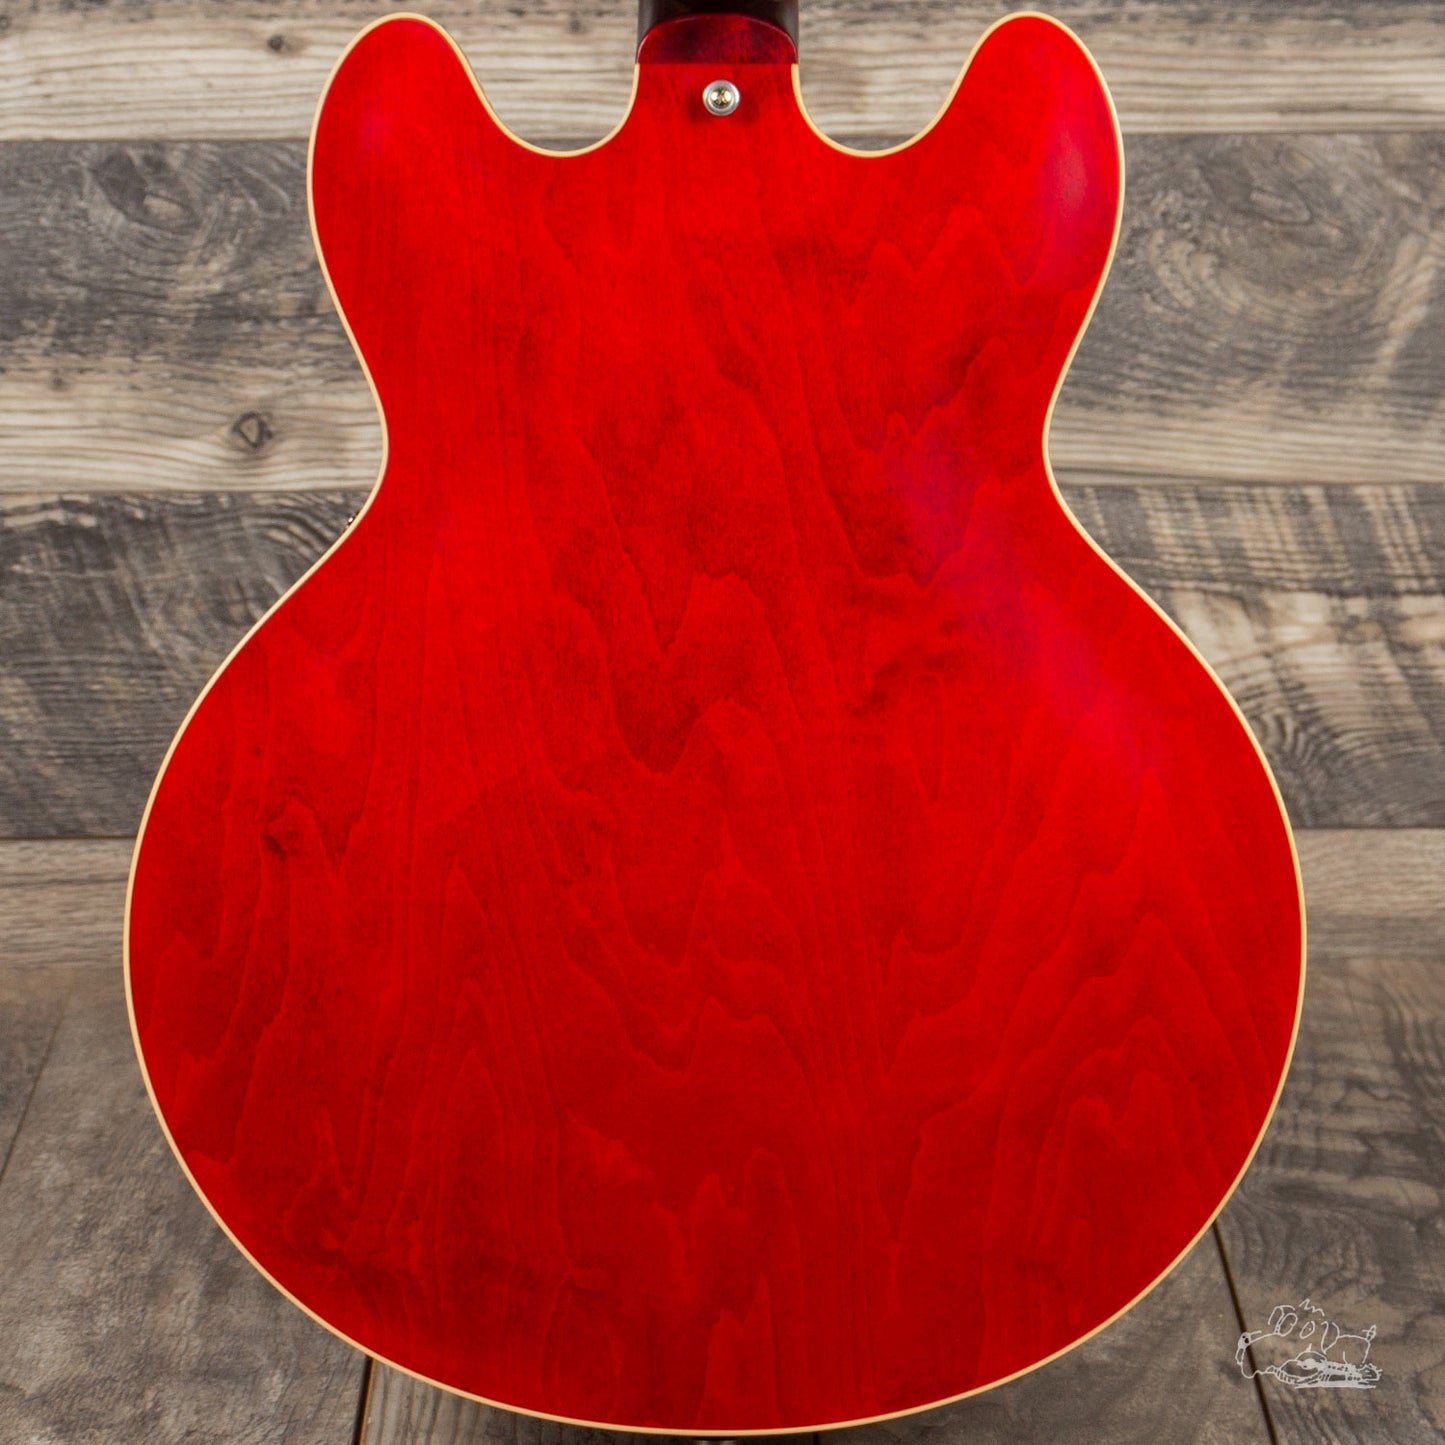 2020 Gibson Custom Shop 64' Reissue ES-335